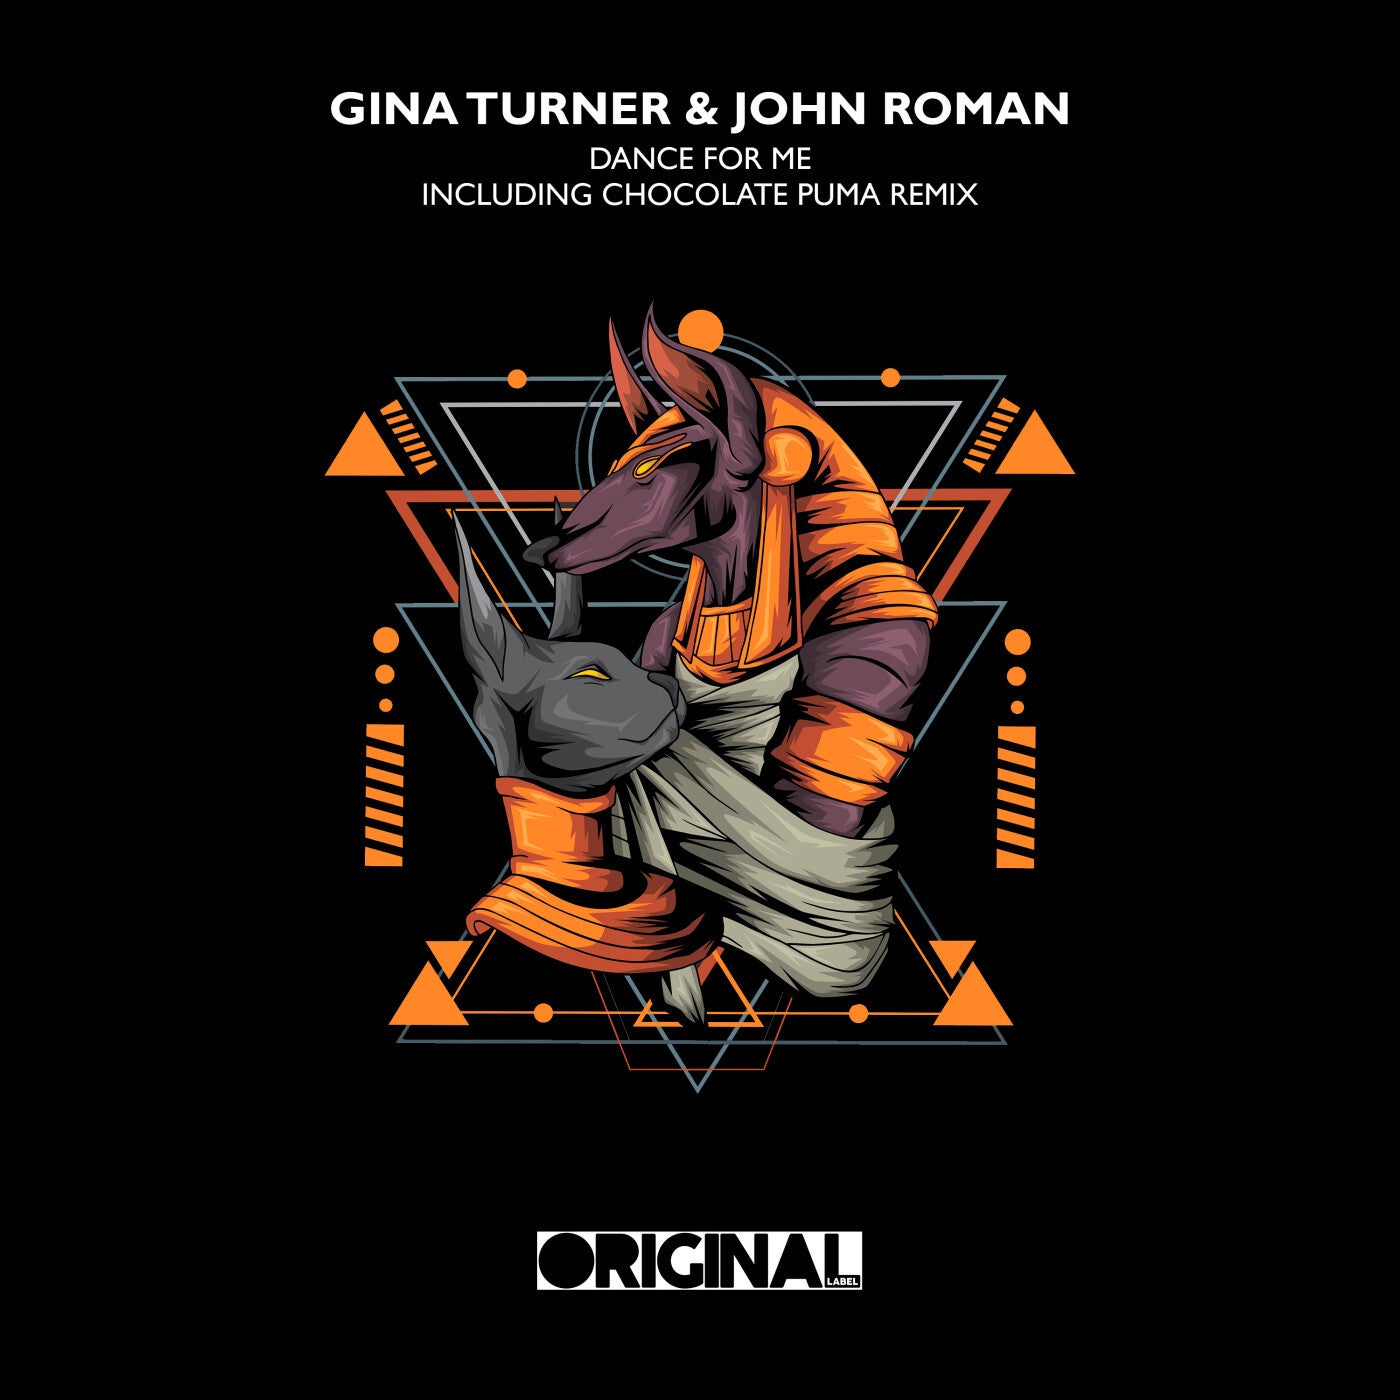 Gina Turner & John Roman - Dance For Me [Original Label]